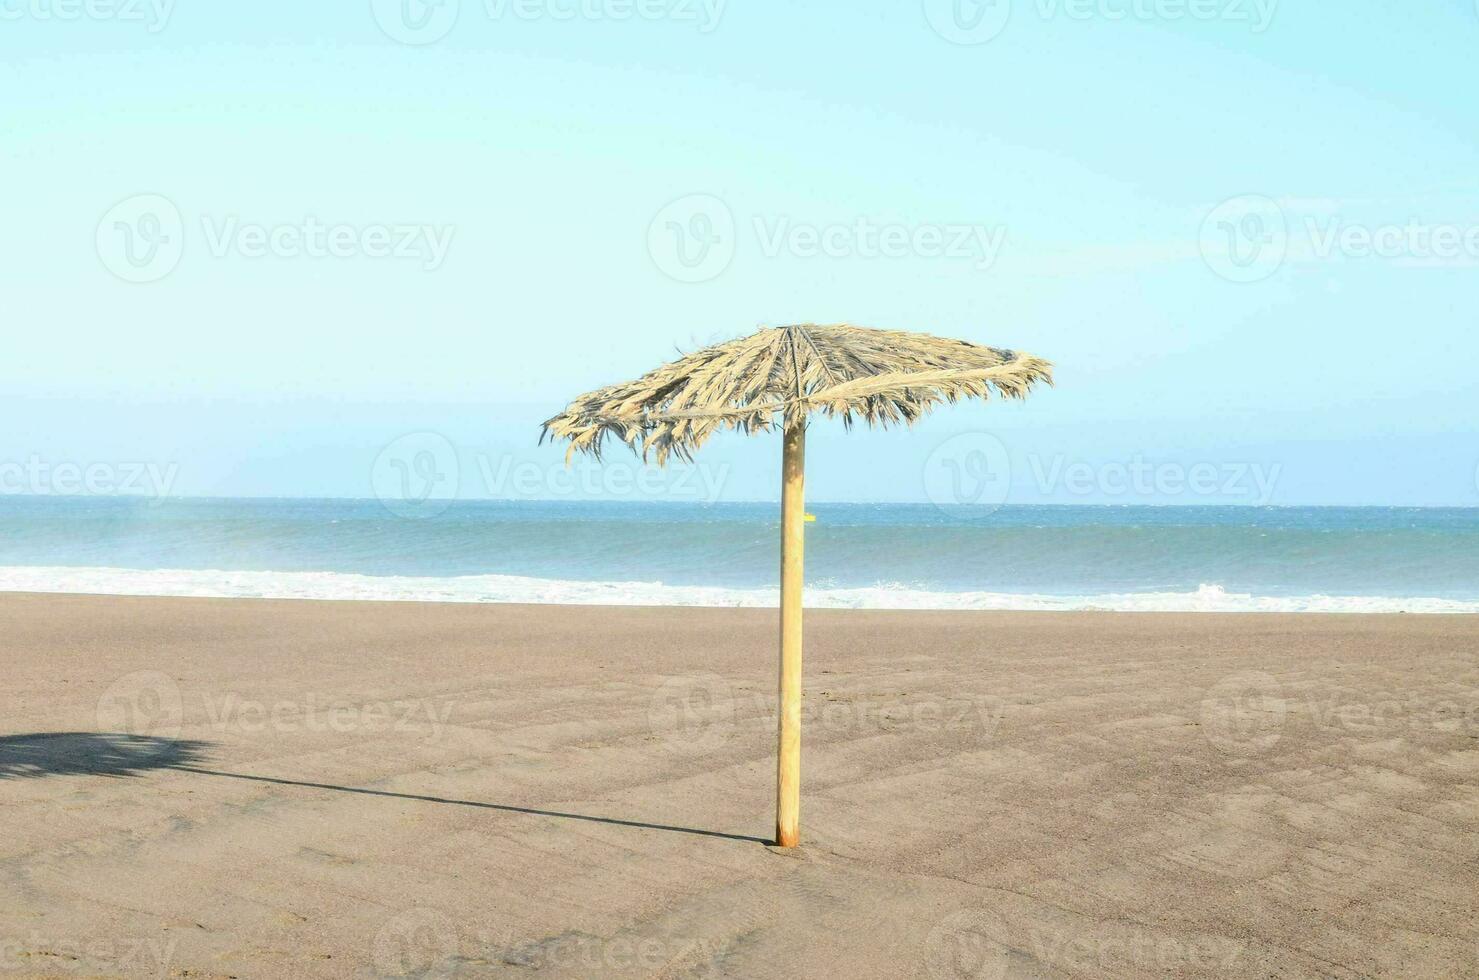 a straw umbrella on the beach photo